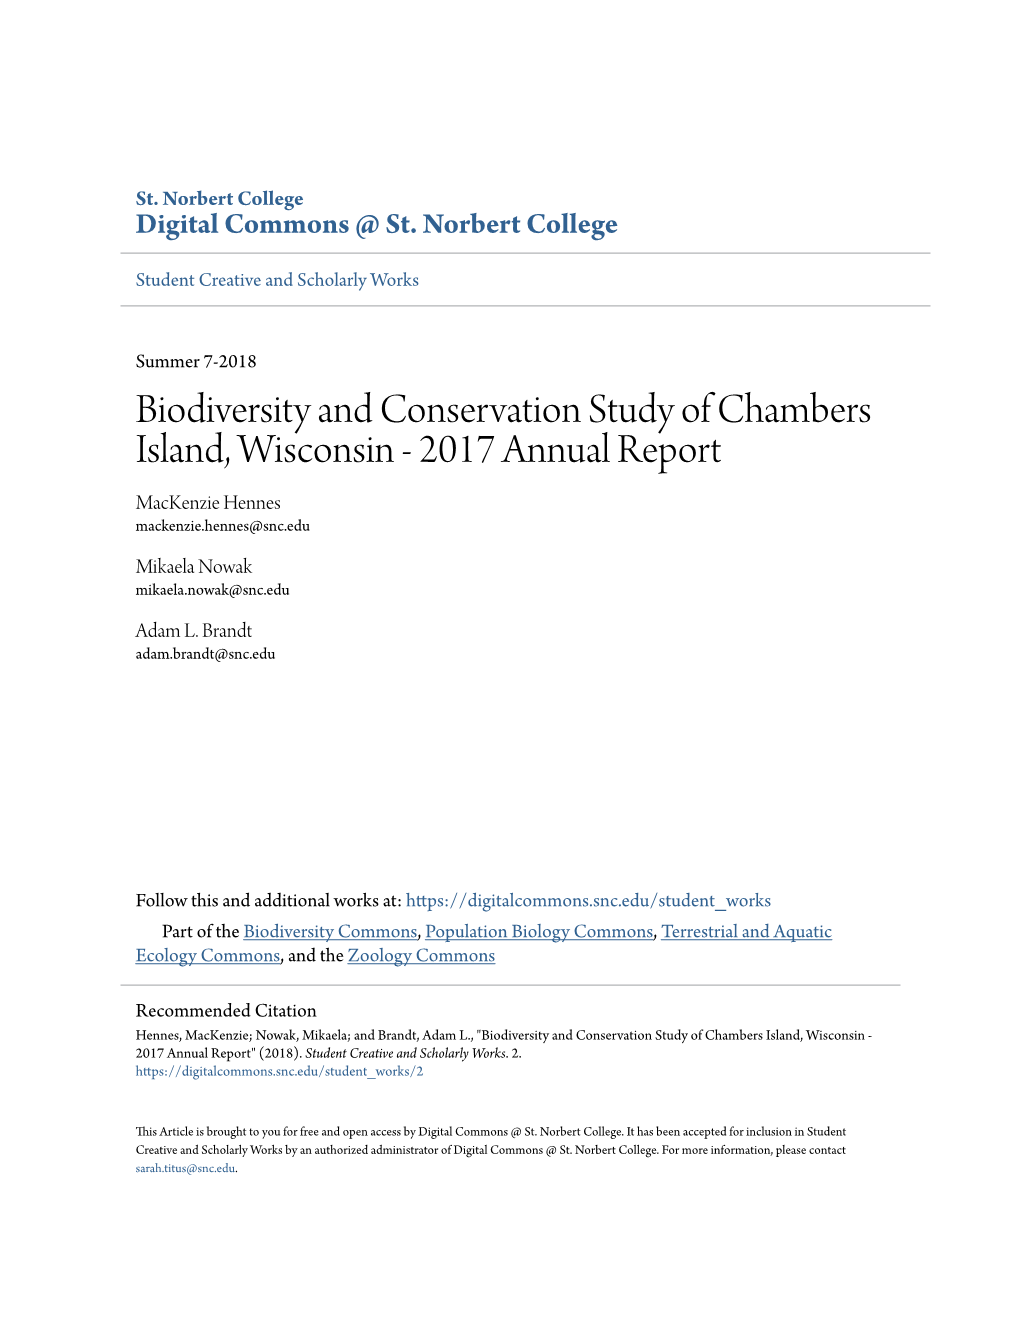 Biodiversity and Conservation Study of Chambers Island, Wisconsin - 2017 Annual Report Mackenzie Hennes Mackenzie.Hennes@Snc.Edu